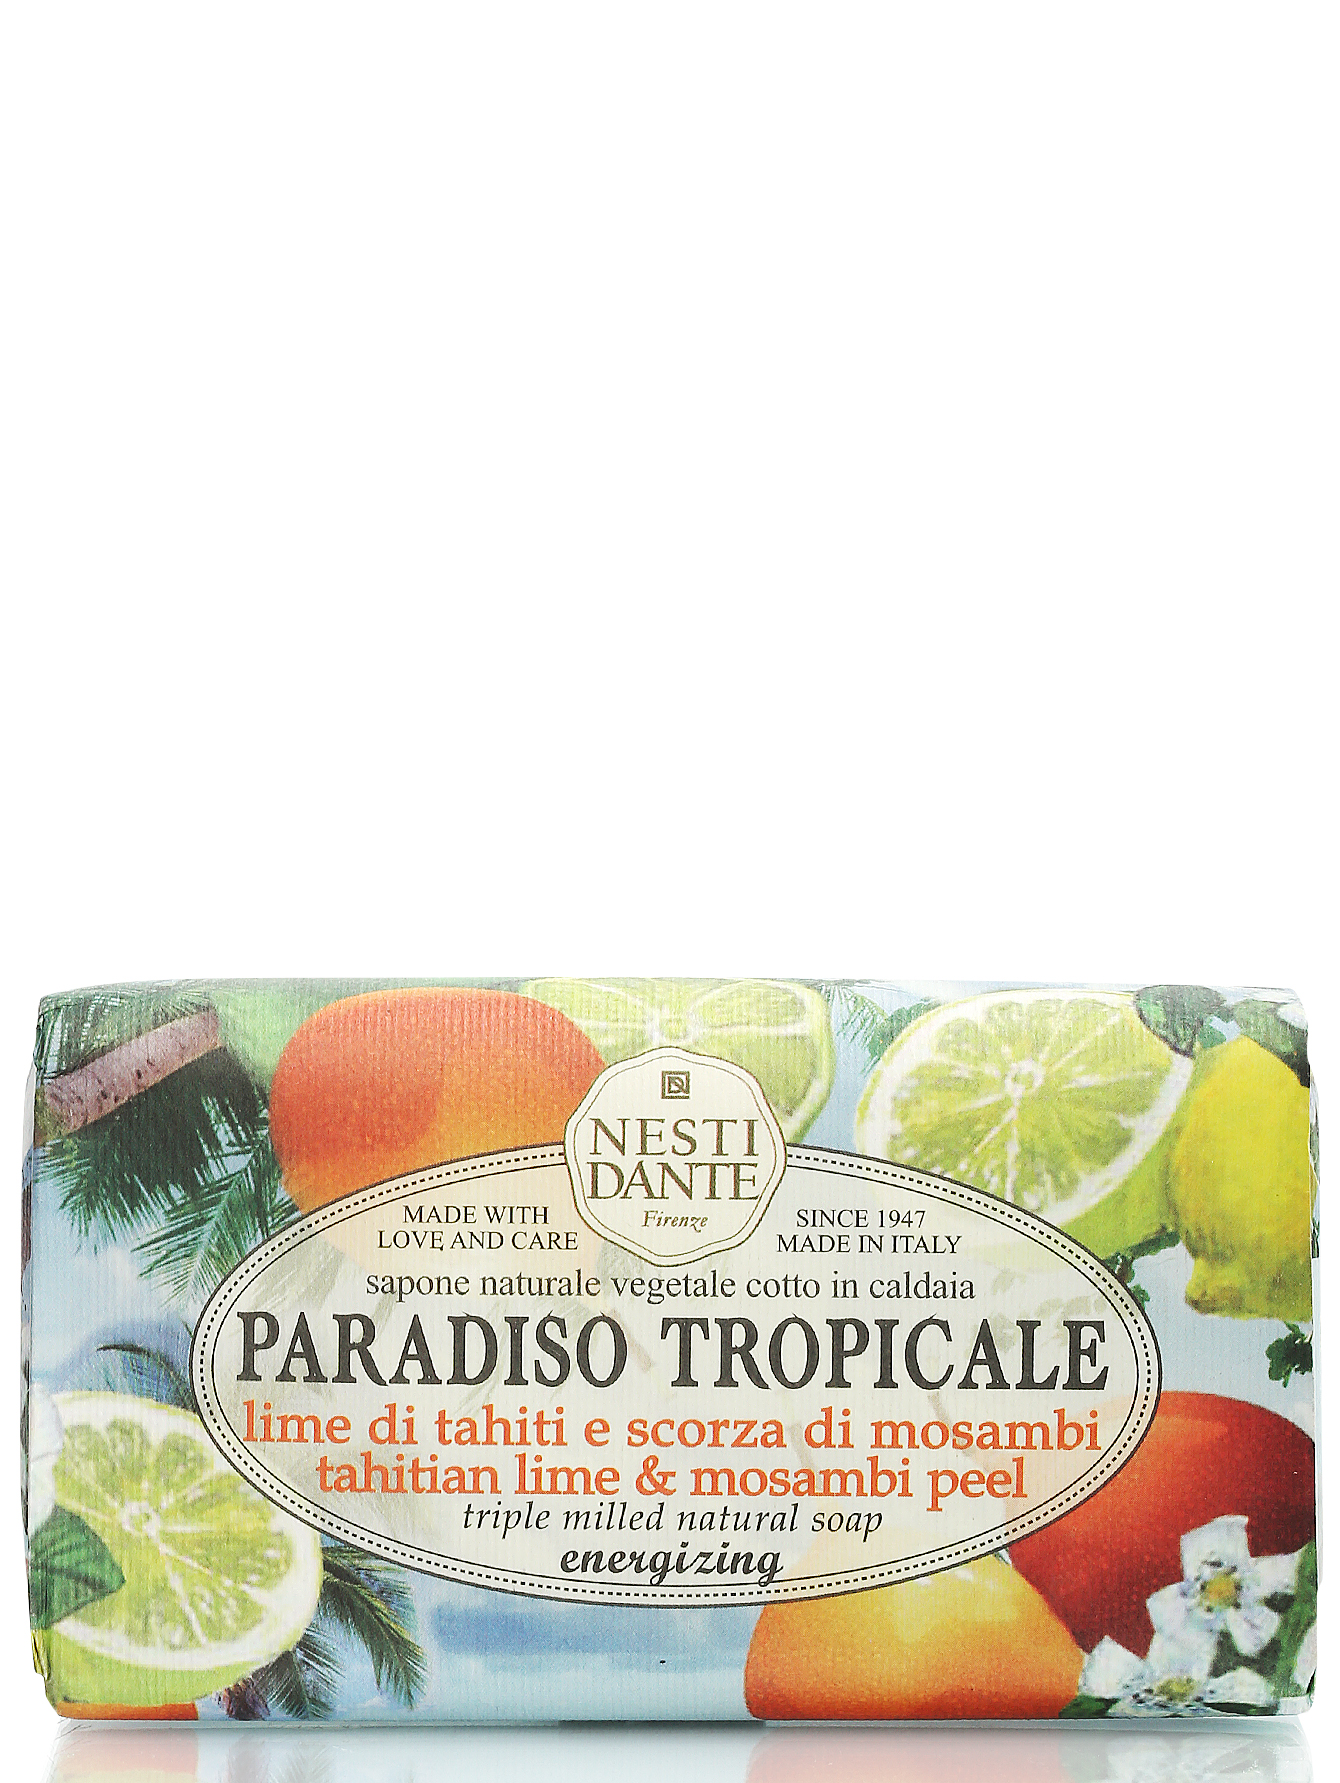 Мыло Paradiso Tropicale, 250 г - Общий вид